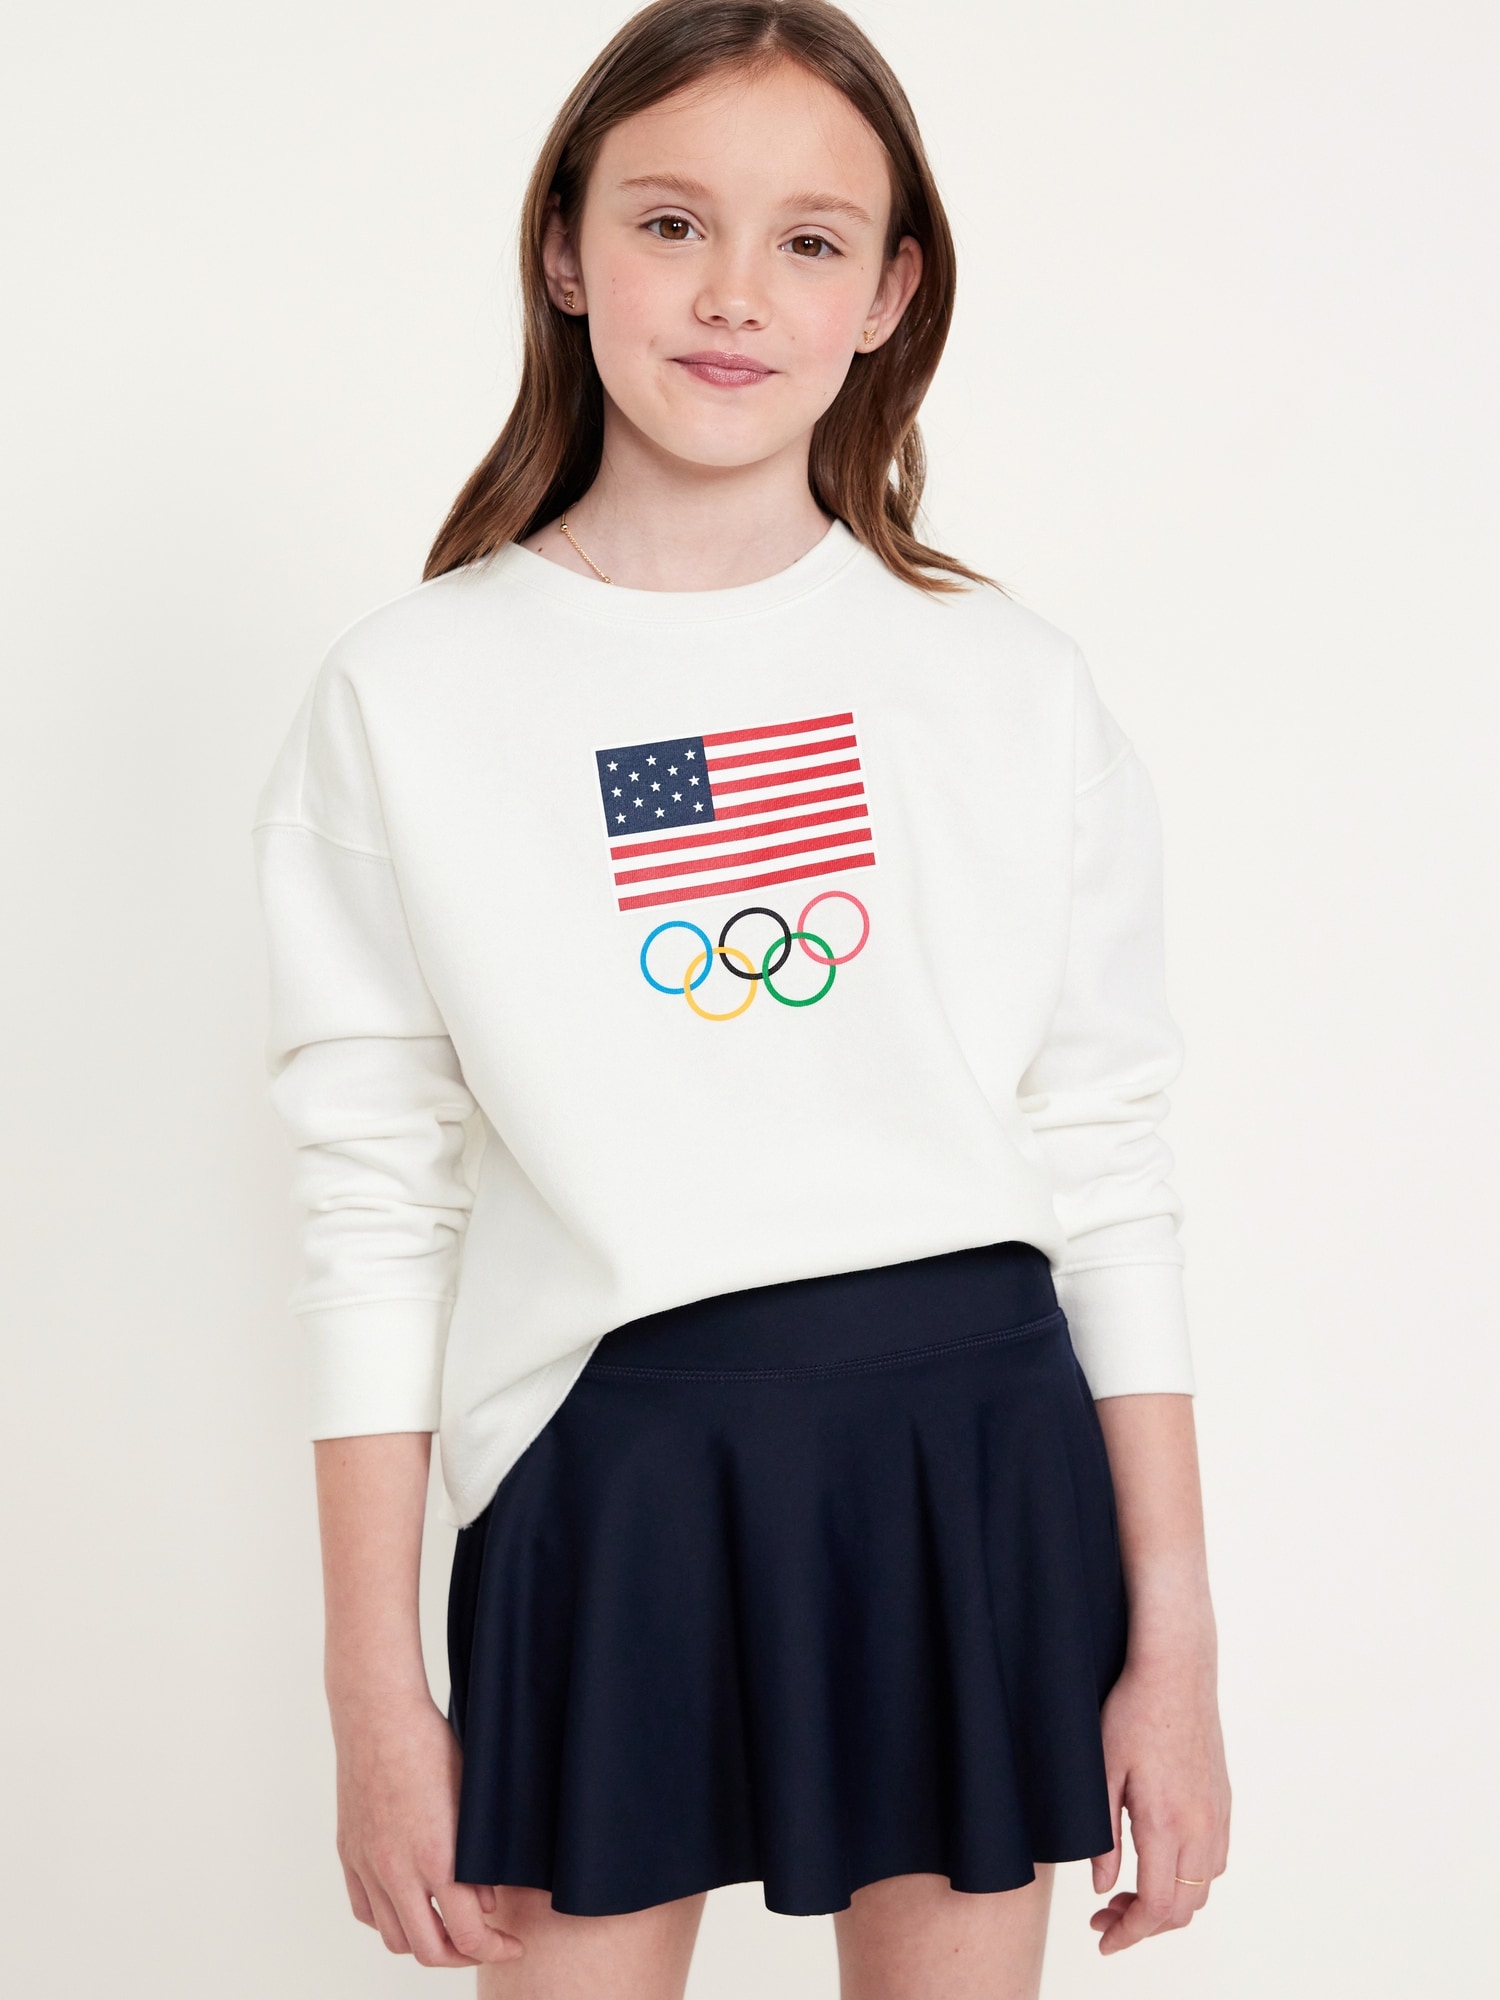 Team USA Graphic Crew-Neck Sweatshirt for Girls